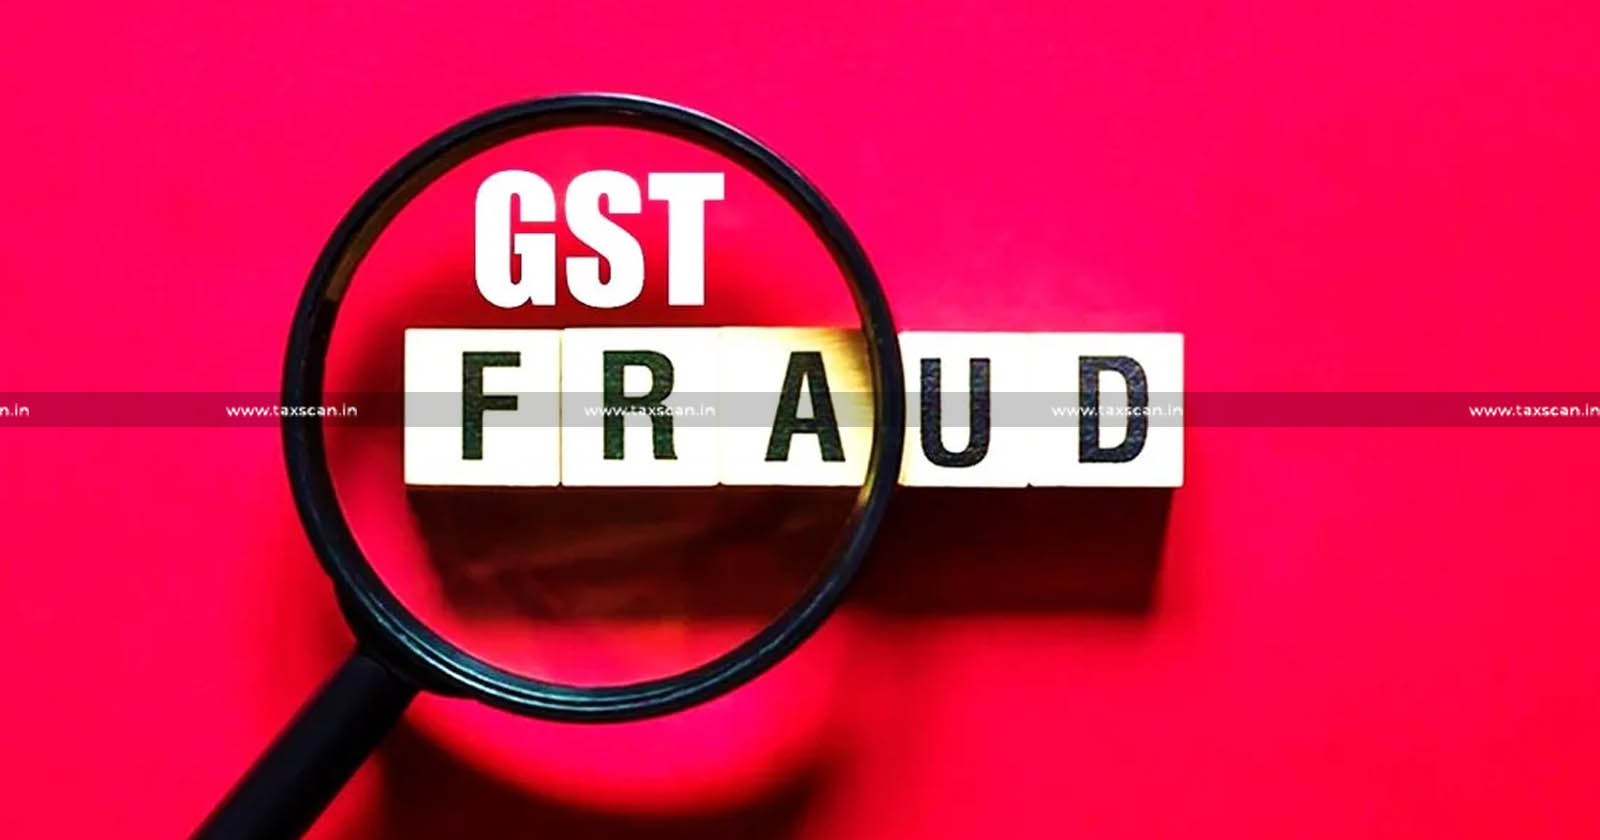 Gujarat High Court - GST - GST Fraud Case - Goods and Service Tax - taxscan